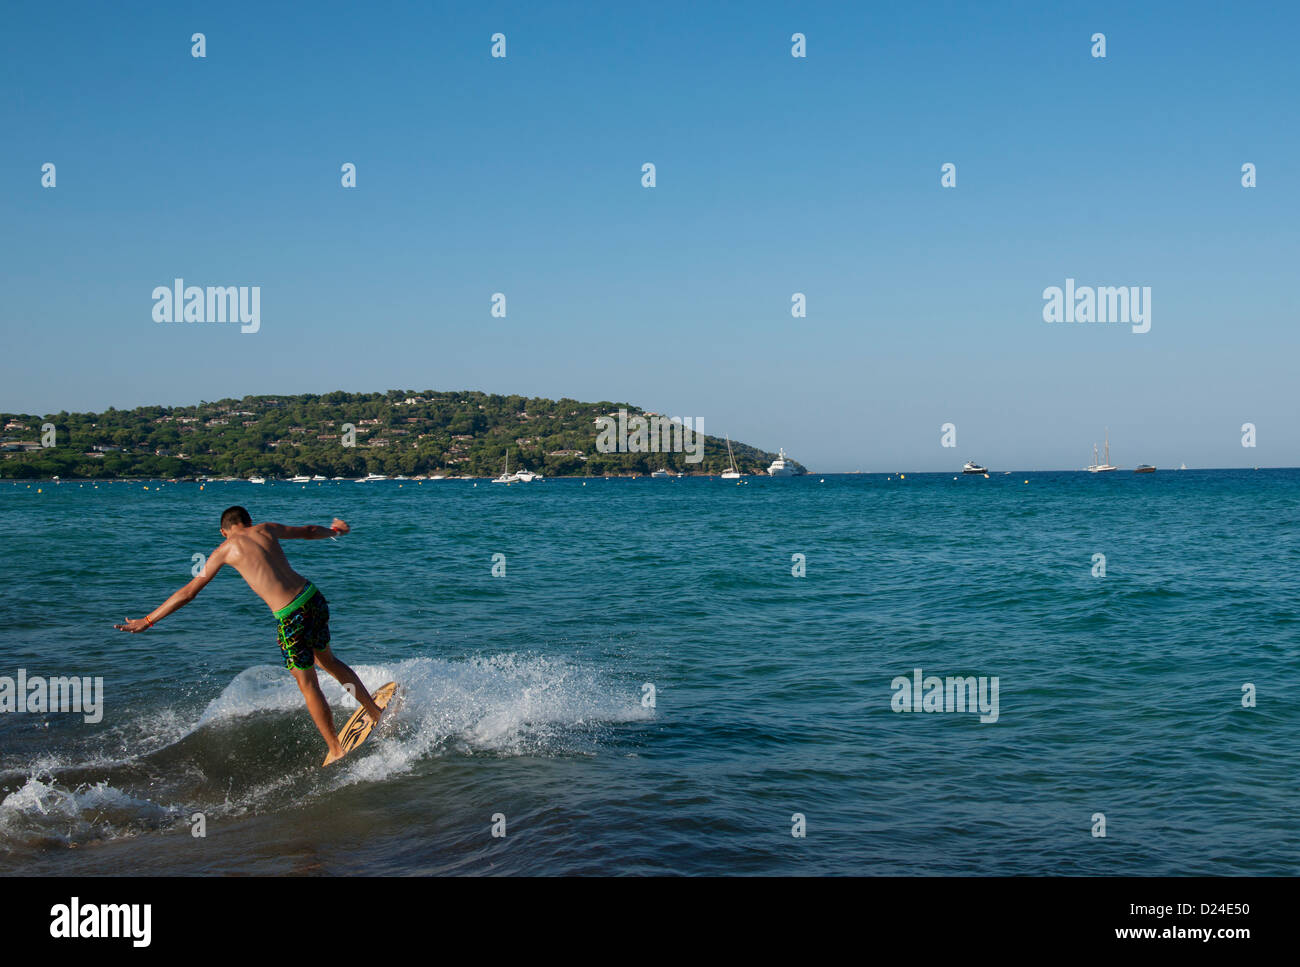 Men, Boy, Surfing, Board, Sand, Sun, Beach, Tahiti, Plage Tahiti, Sea, Sant Tropez, St. Tropez, France, Europe Stock Photo